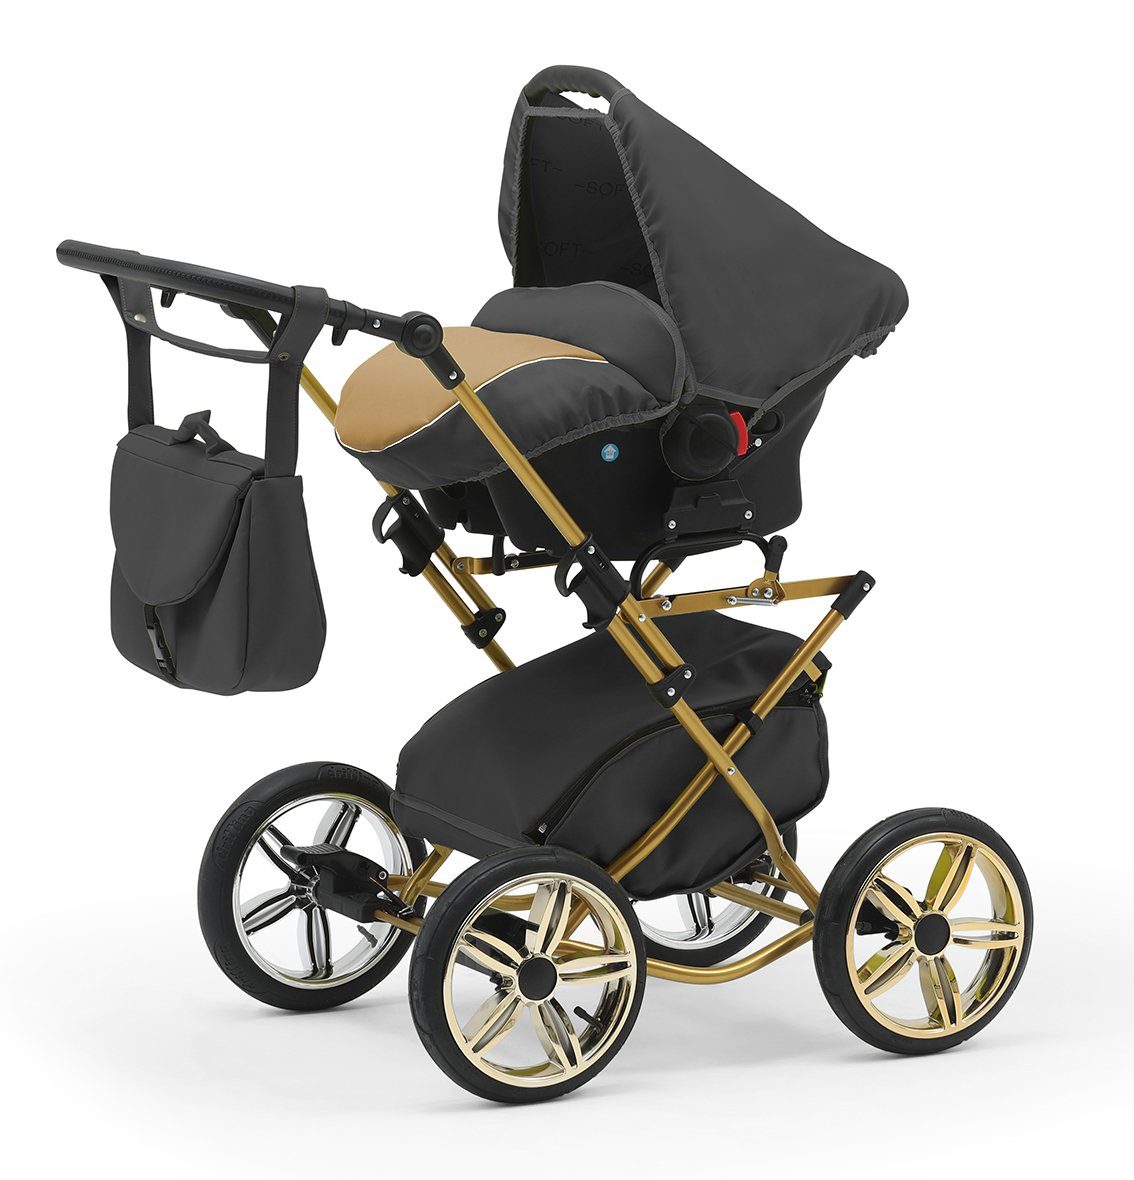 babies-on-wheels Kombi-Kinderwagen Sorento 3 in Beige-Grau 13 10 - 1 - Teile Autositz in inkl. Designs